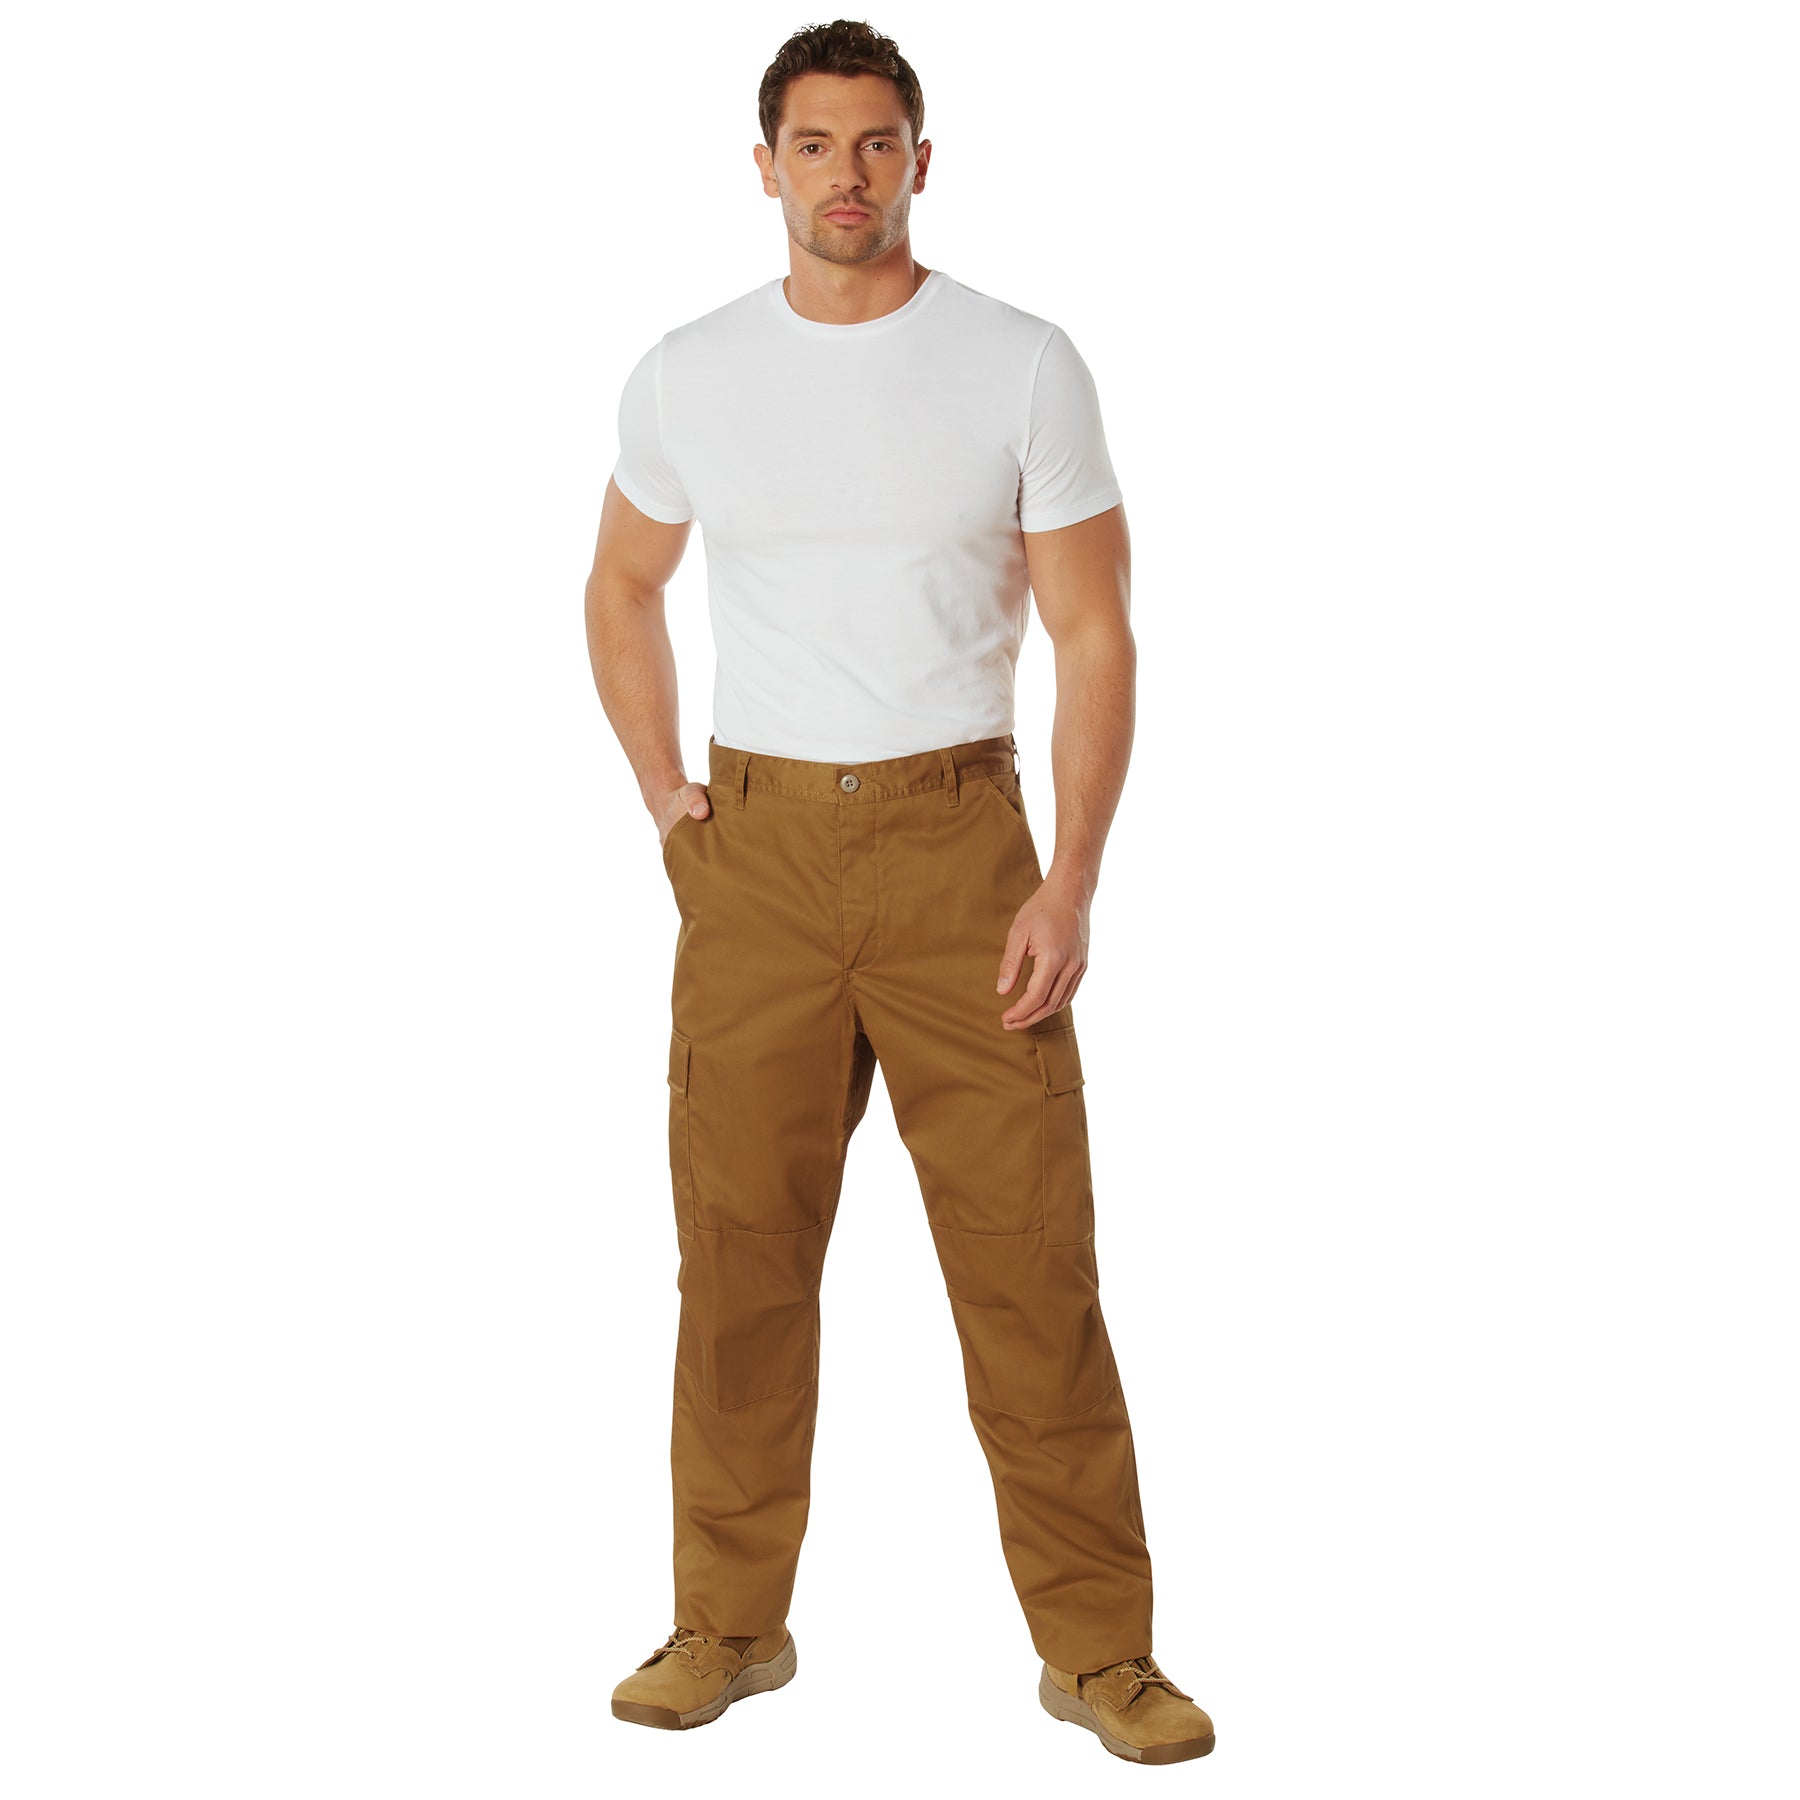 Poly/Cotton Tactical BDU Pants Work Brown